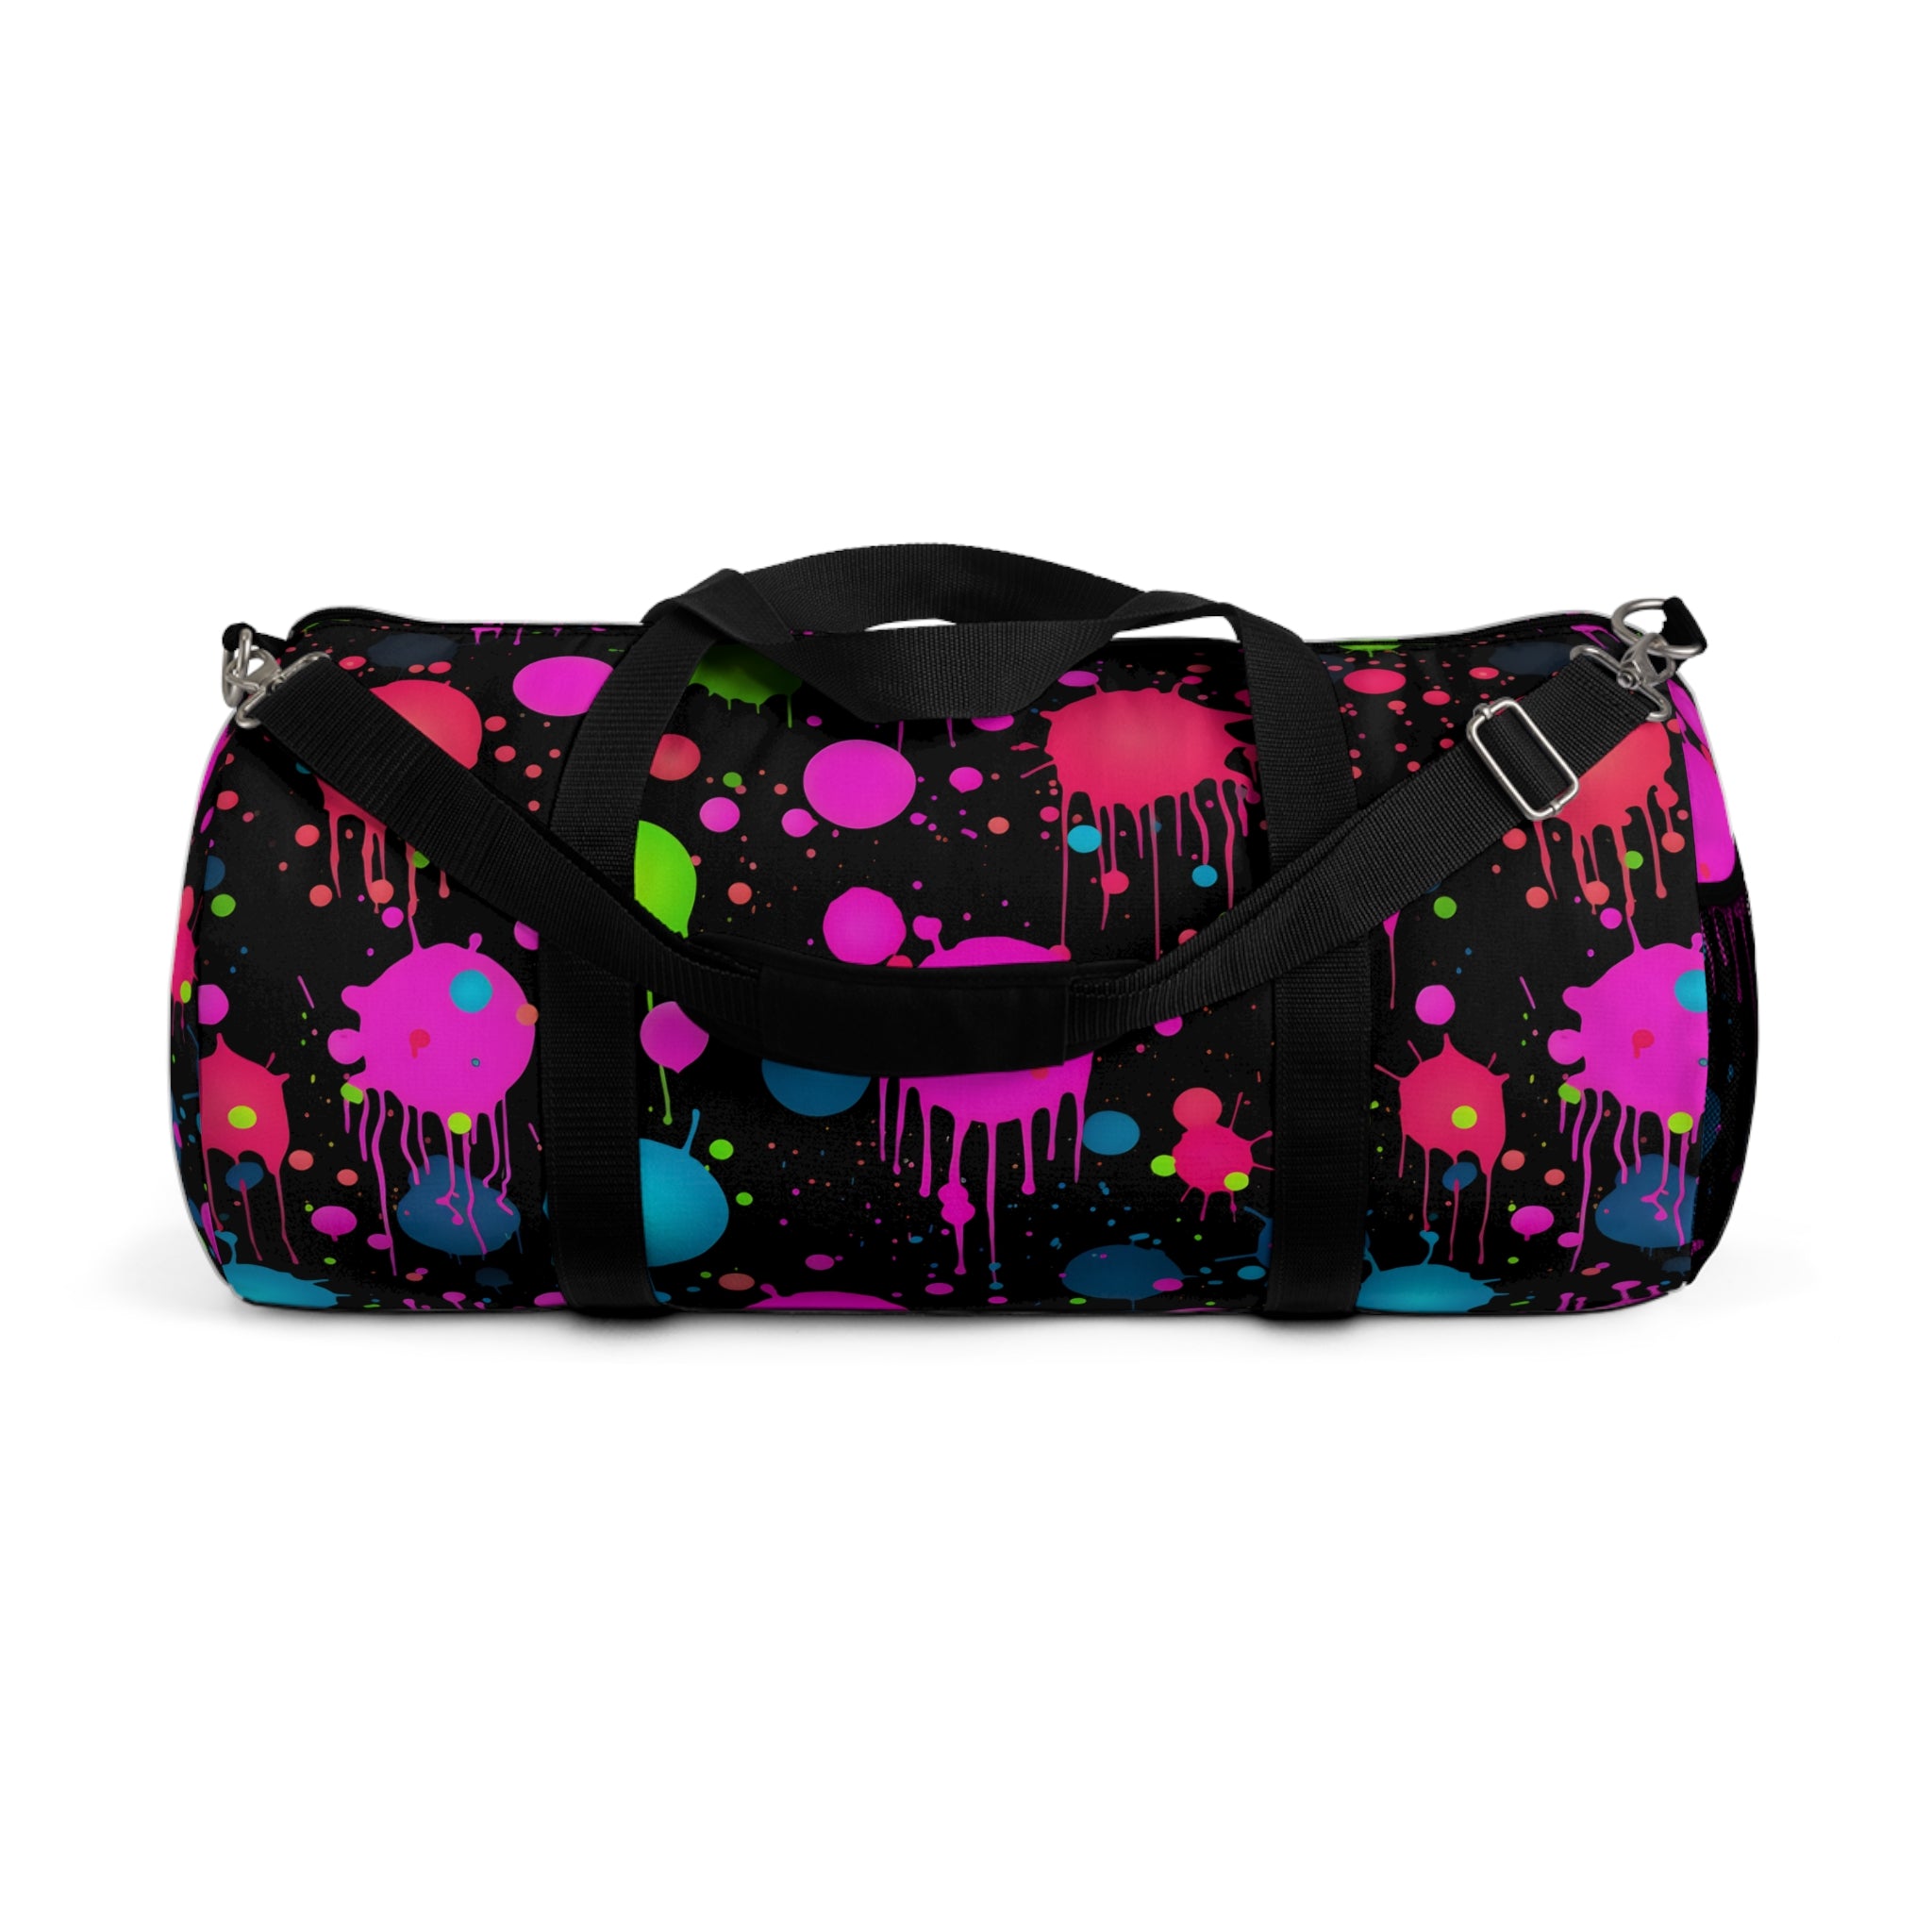 Neon Spark Duffel Bag